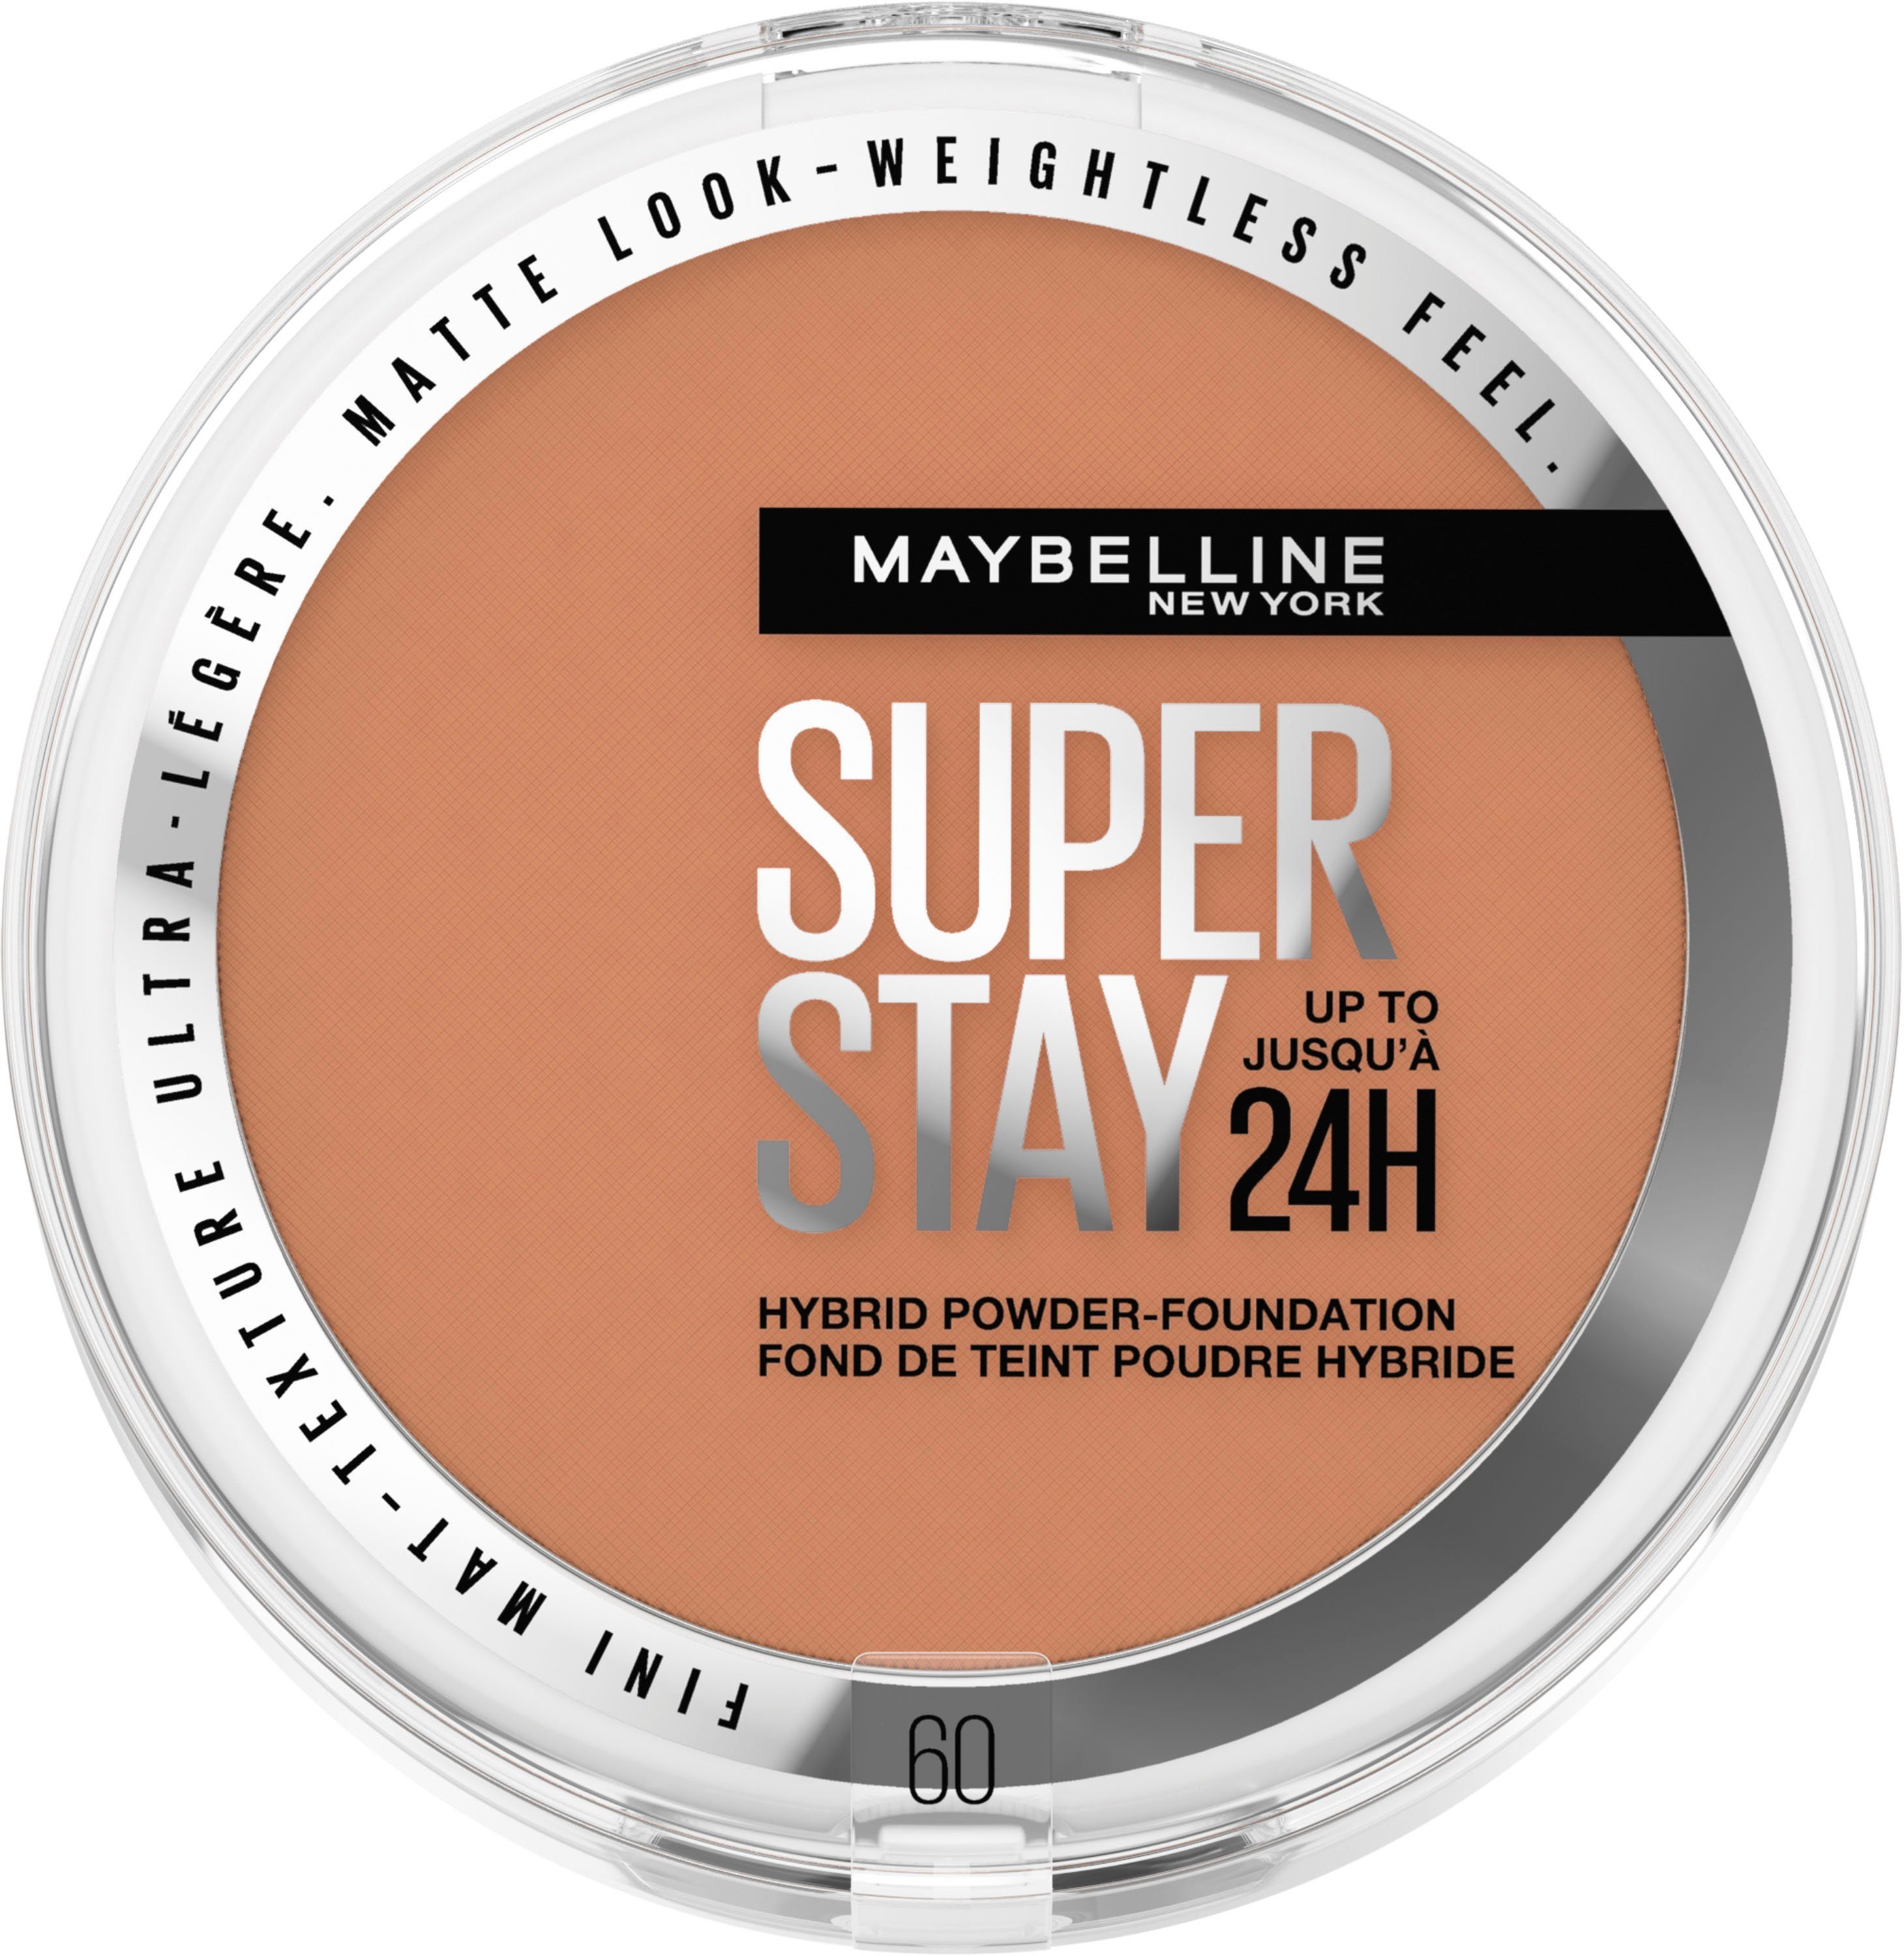 MAYBELLINE NEW YORK Foundation Maybelline Puder Make-Up Stay York Super New Hybrides